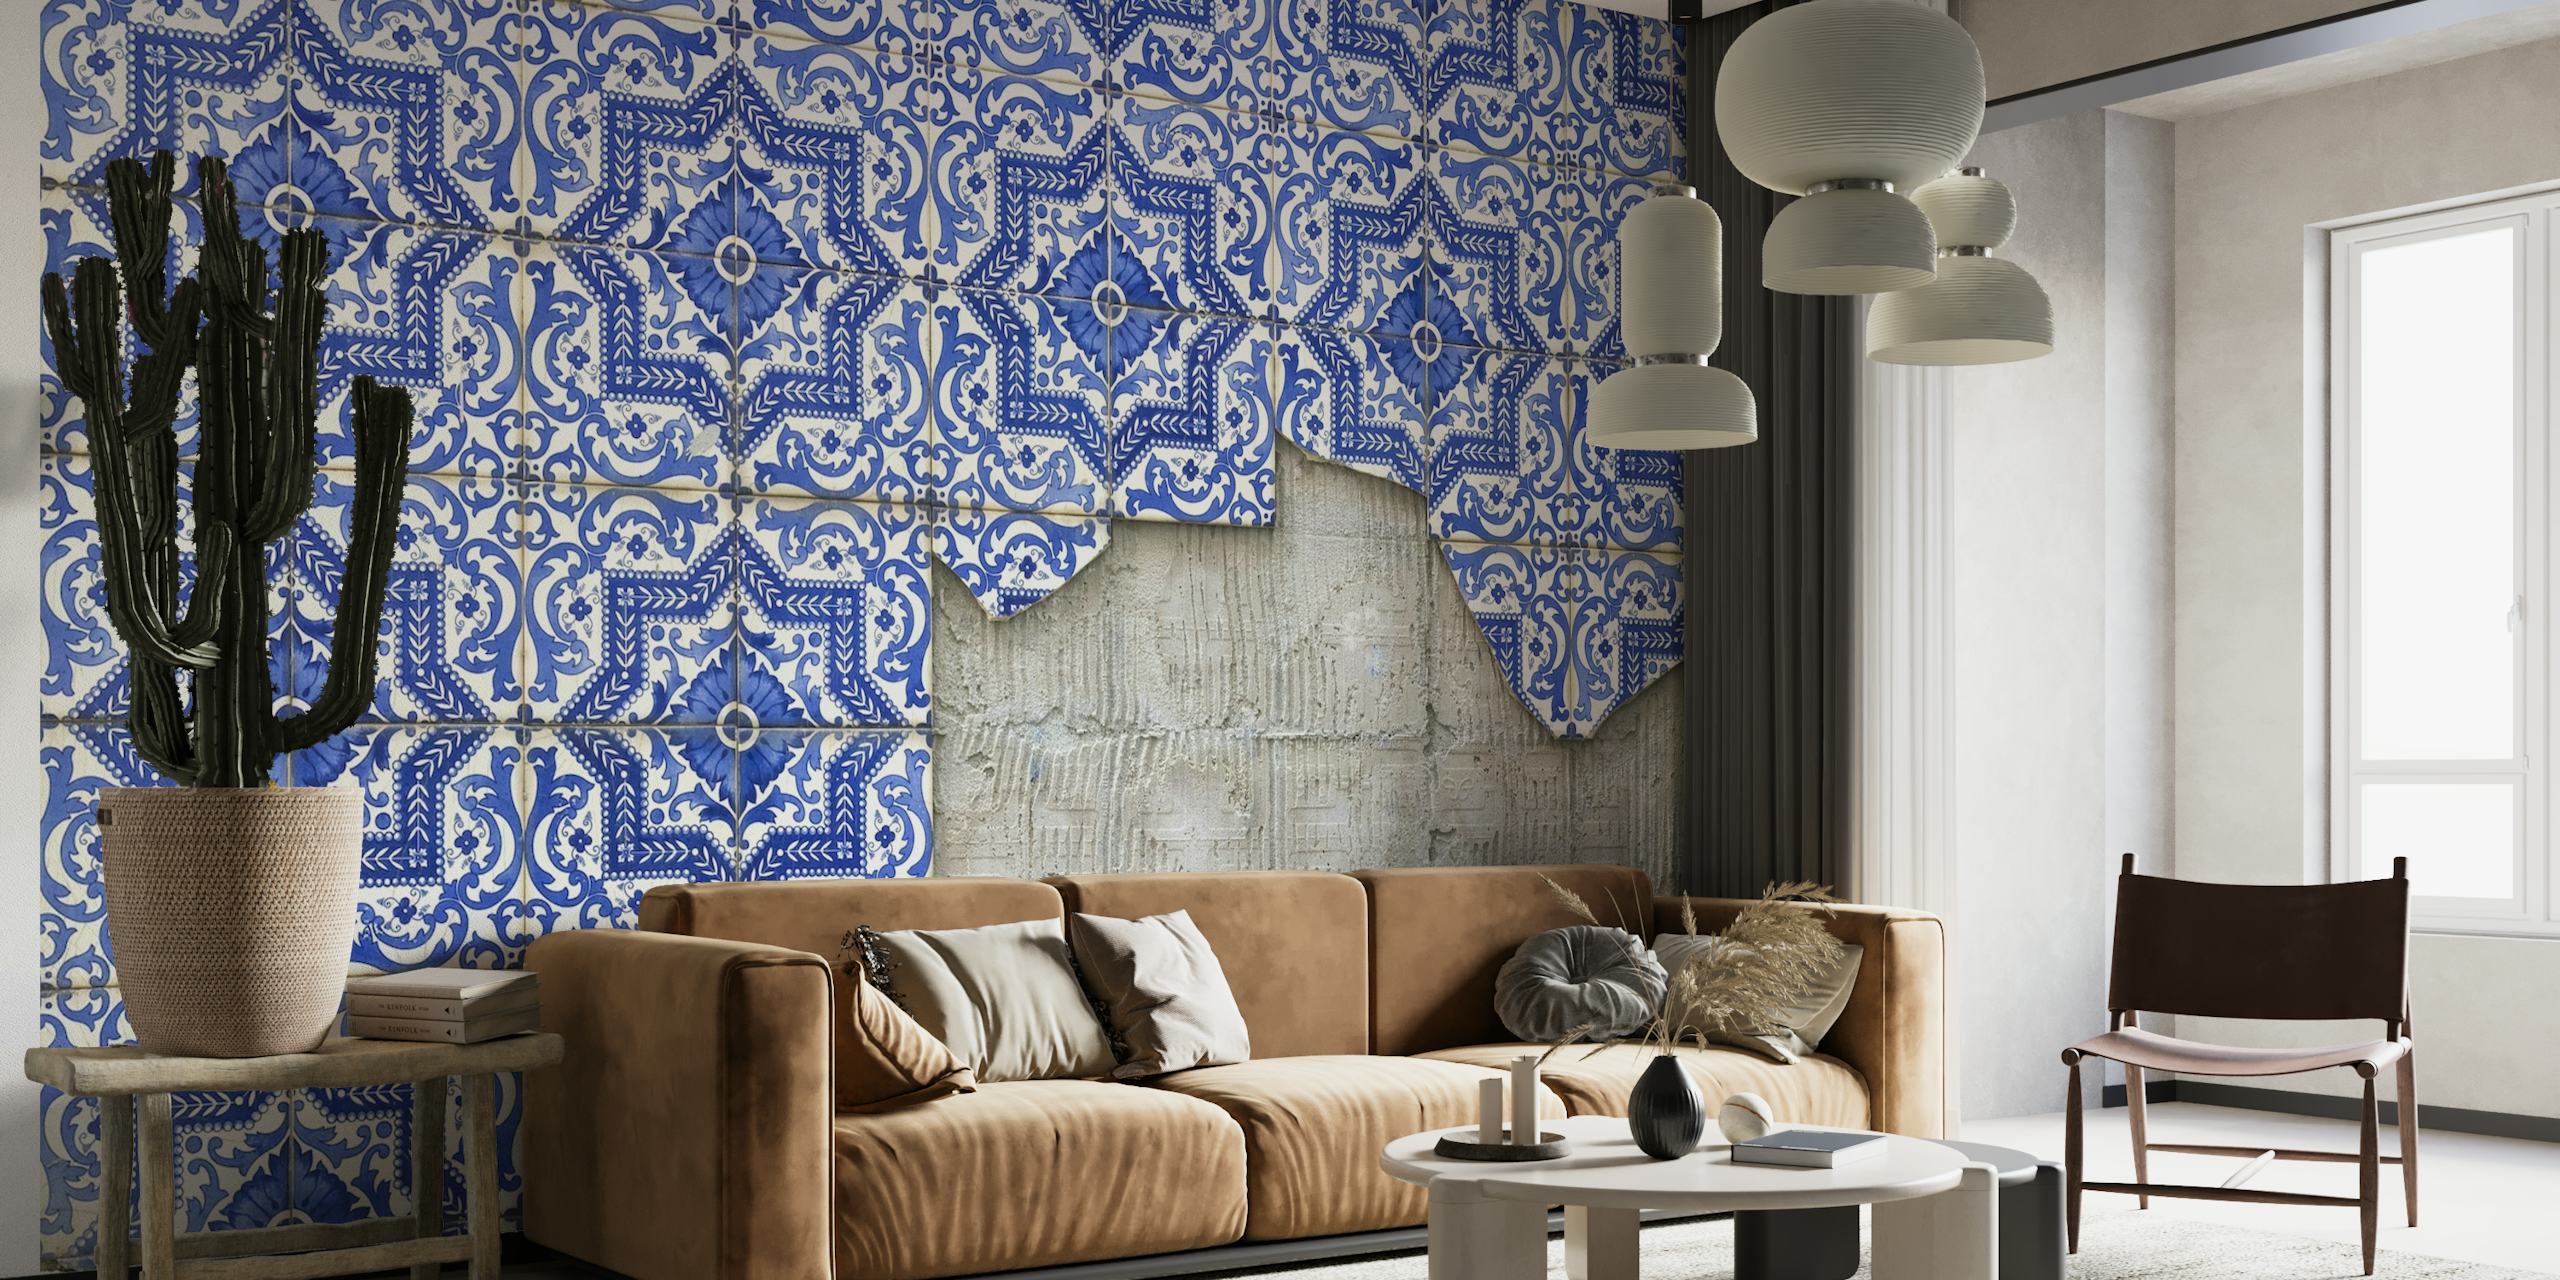 Azulejos tiles in Lisbon wallpaper